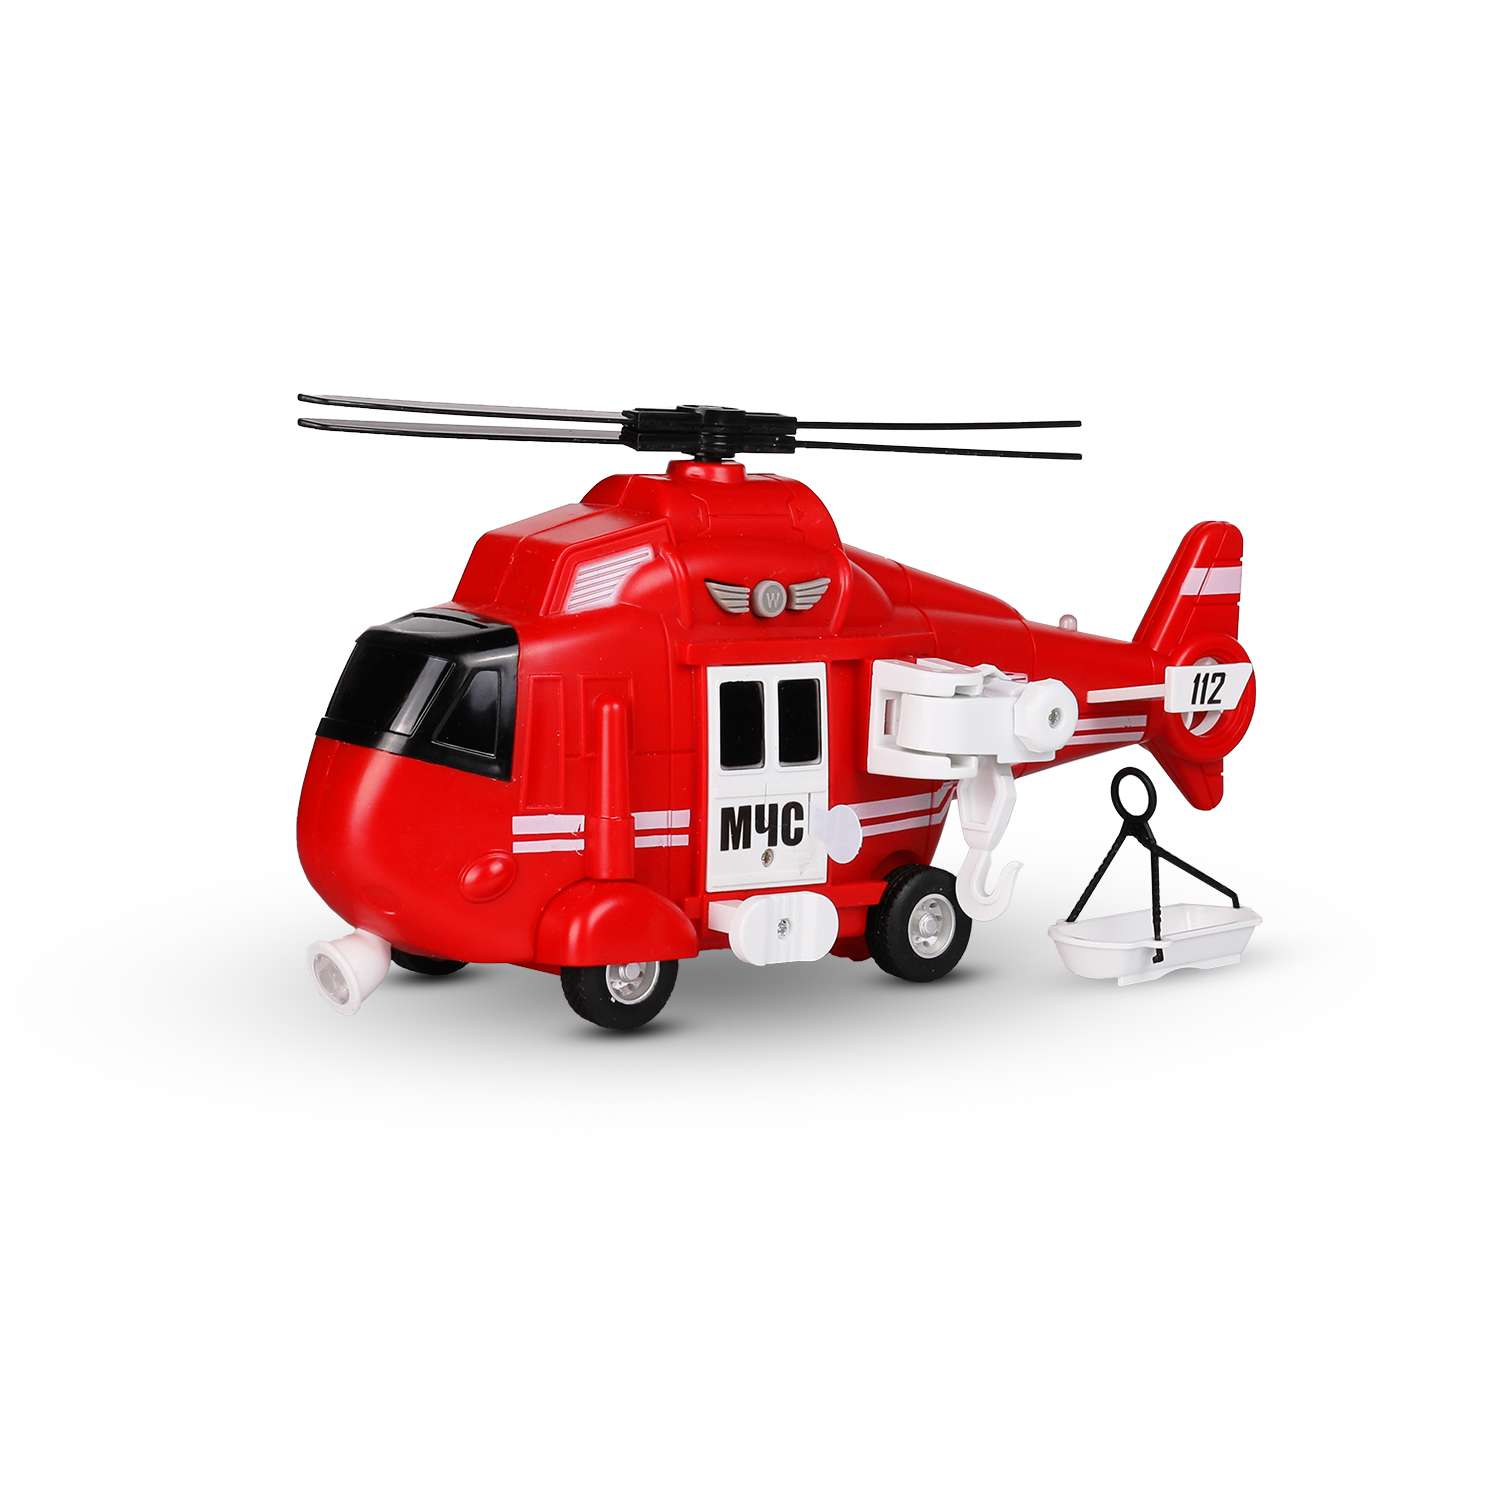 Модель Kid Rocks Вертолёт МЧС масштаб 1:16 со звуком и светом YK-2115 - фото 1